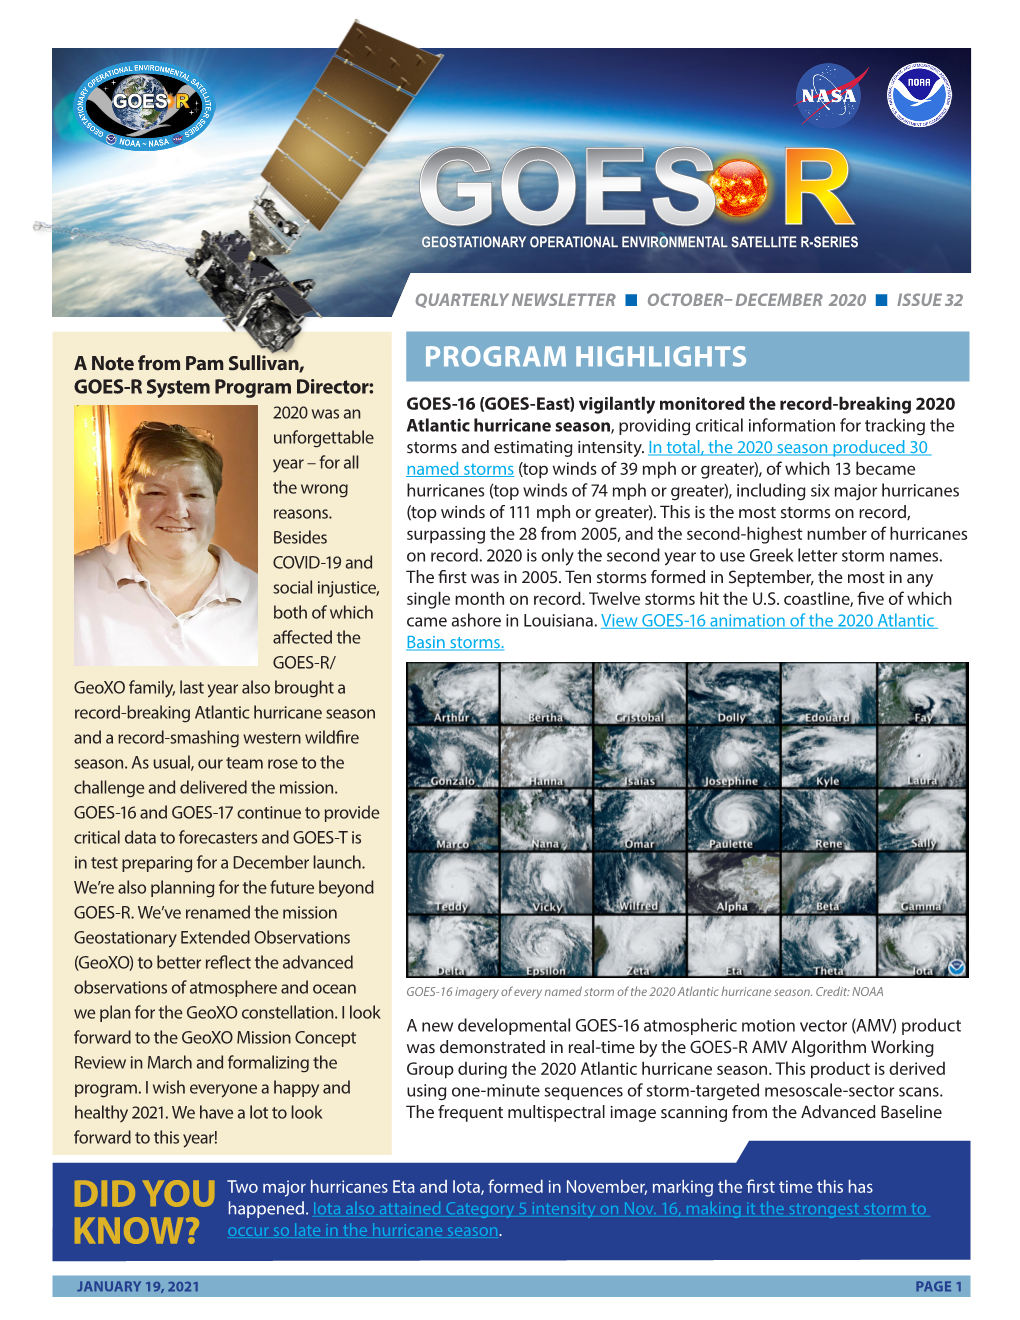 The GOES-R/Geoxo Quarterly Newsletter for October